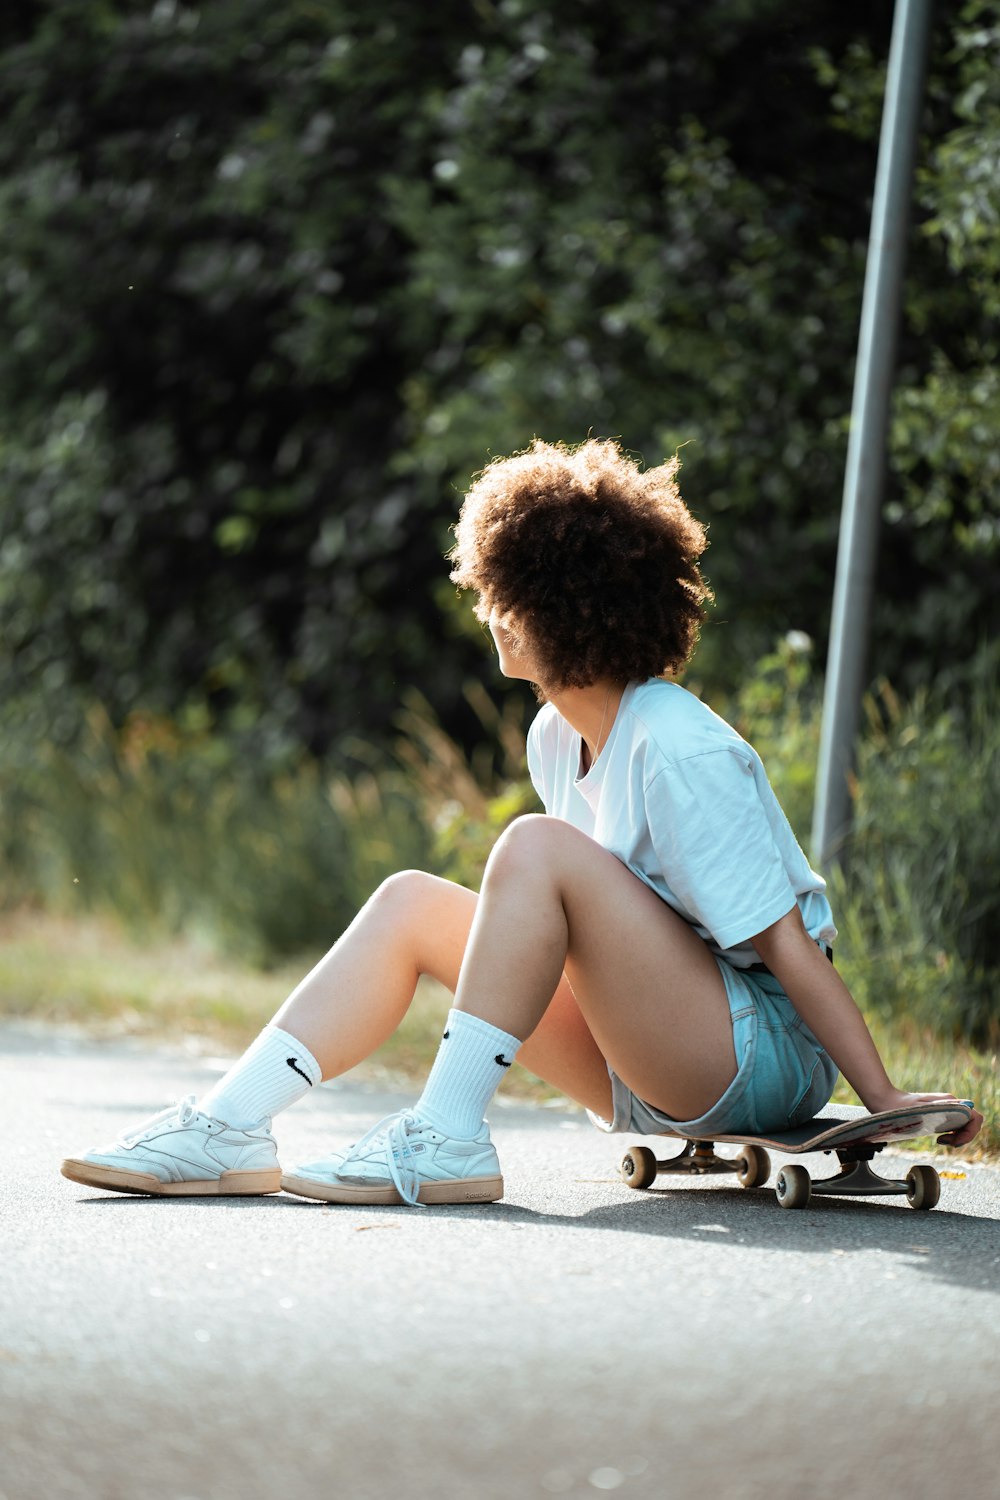 a little girl sitting on a skateboard